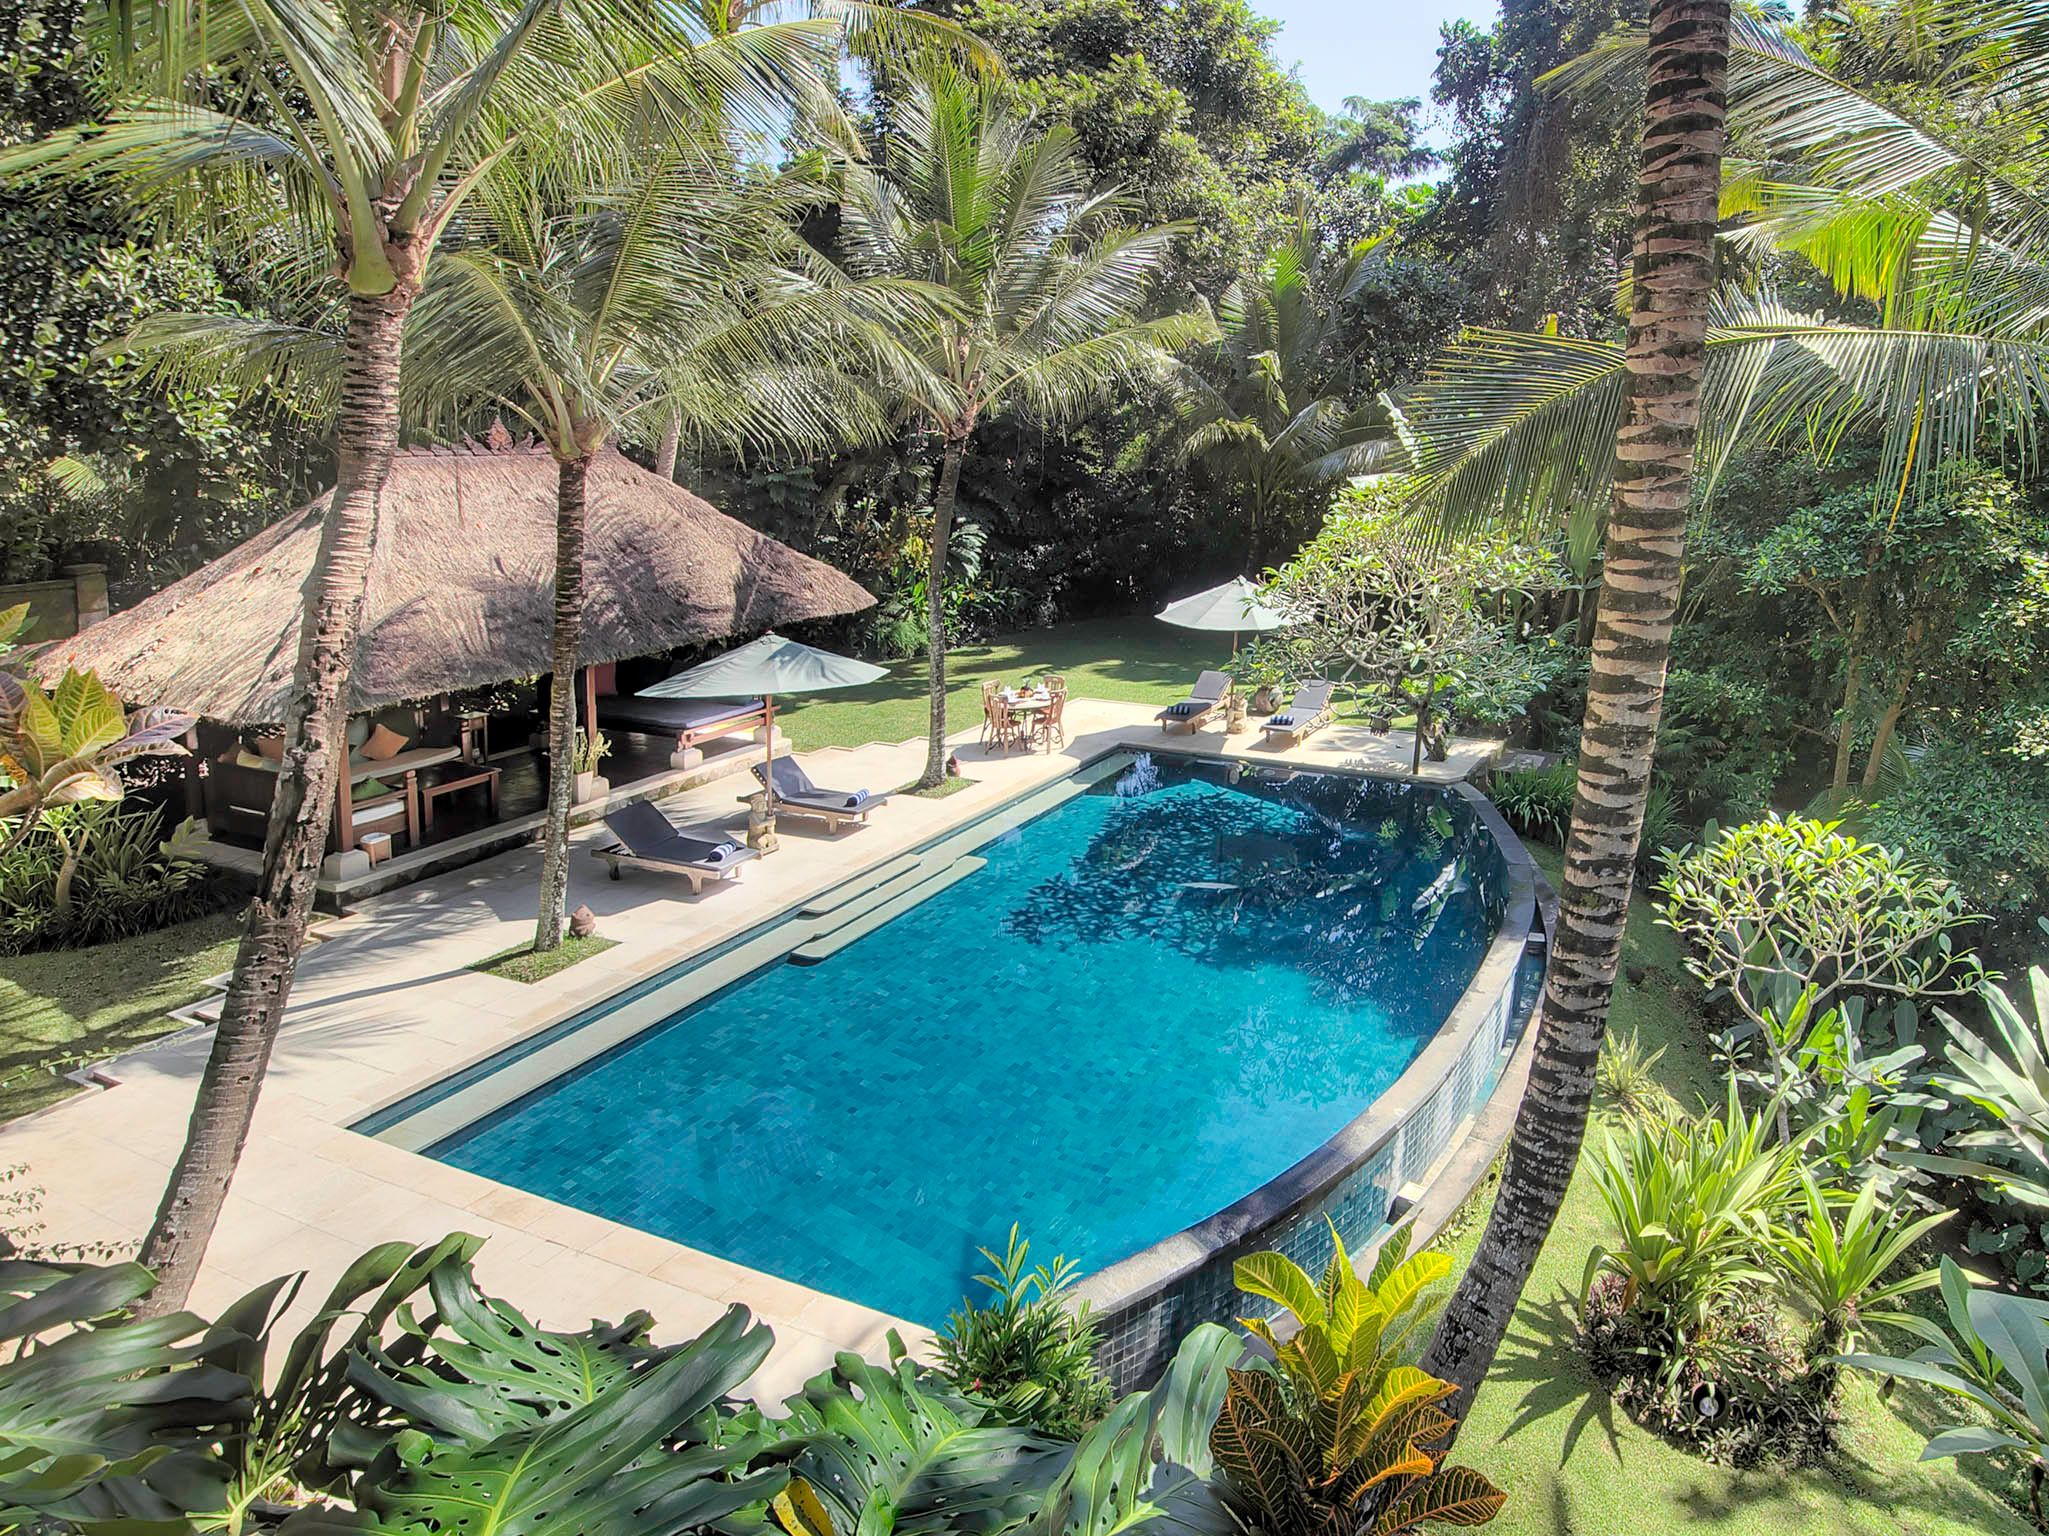 Villa Alamanda - Overview of pool area